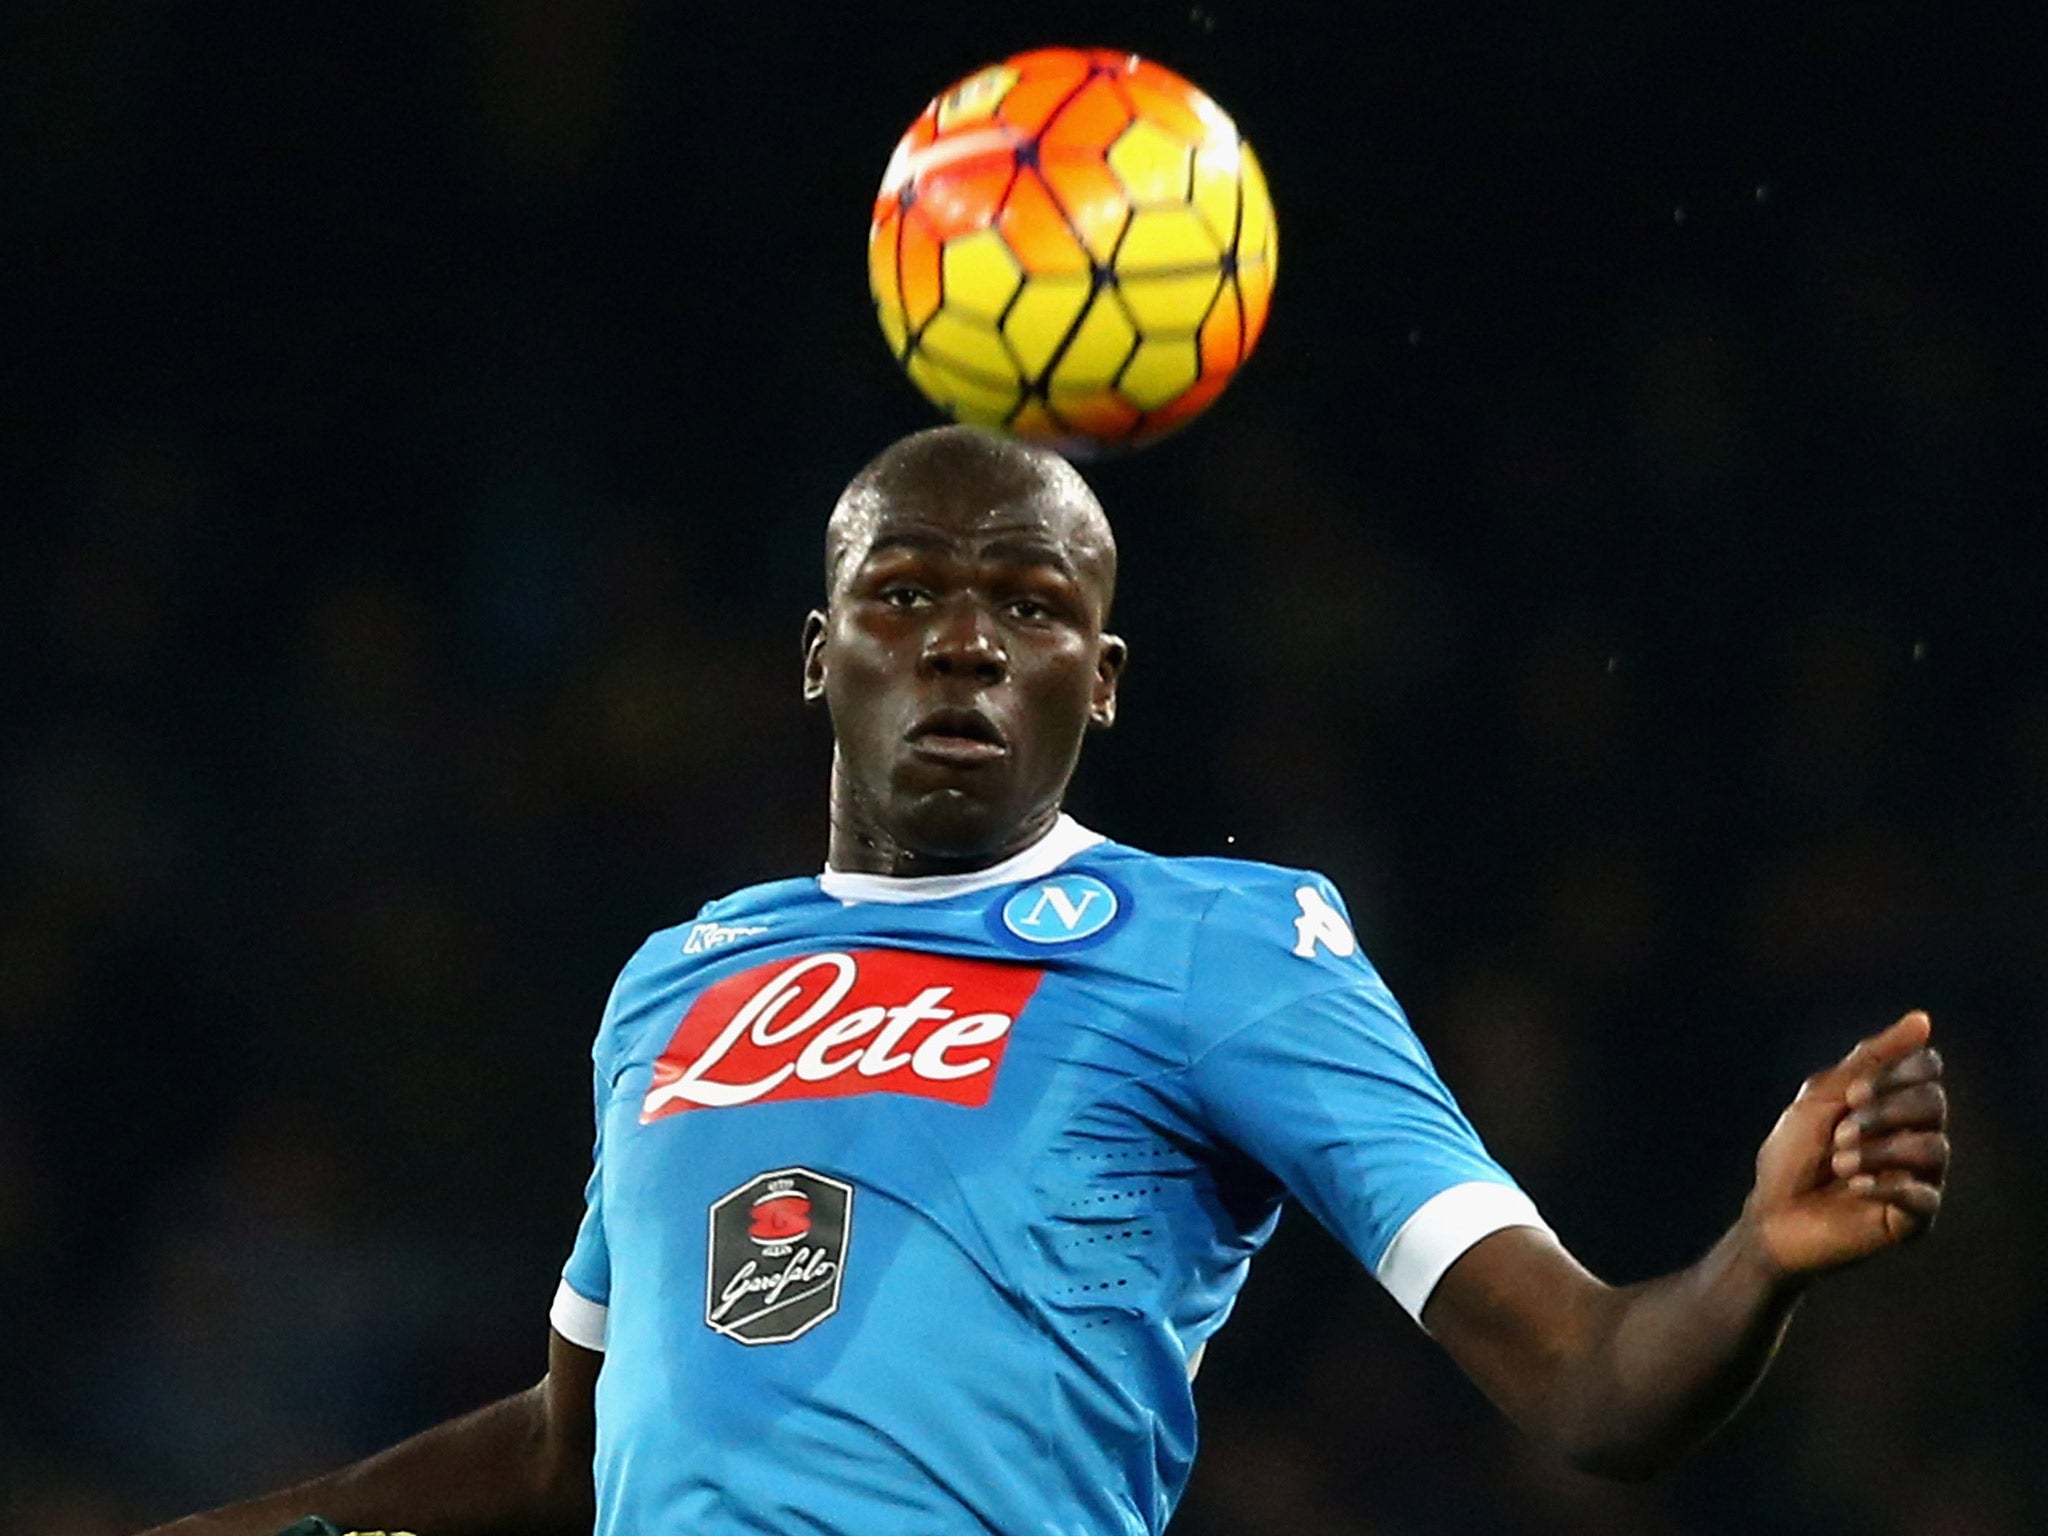 Napoli defender Kalidou Koulibaly remains on Chelsea's radar